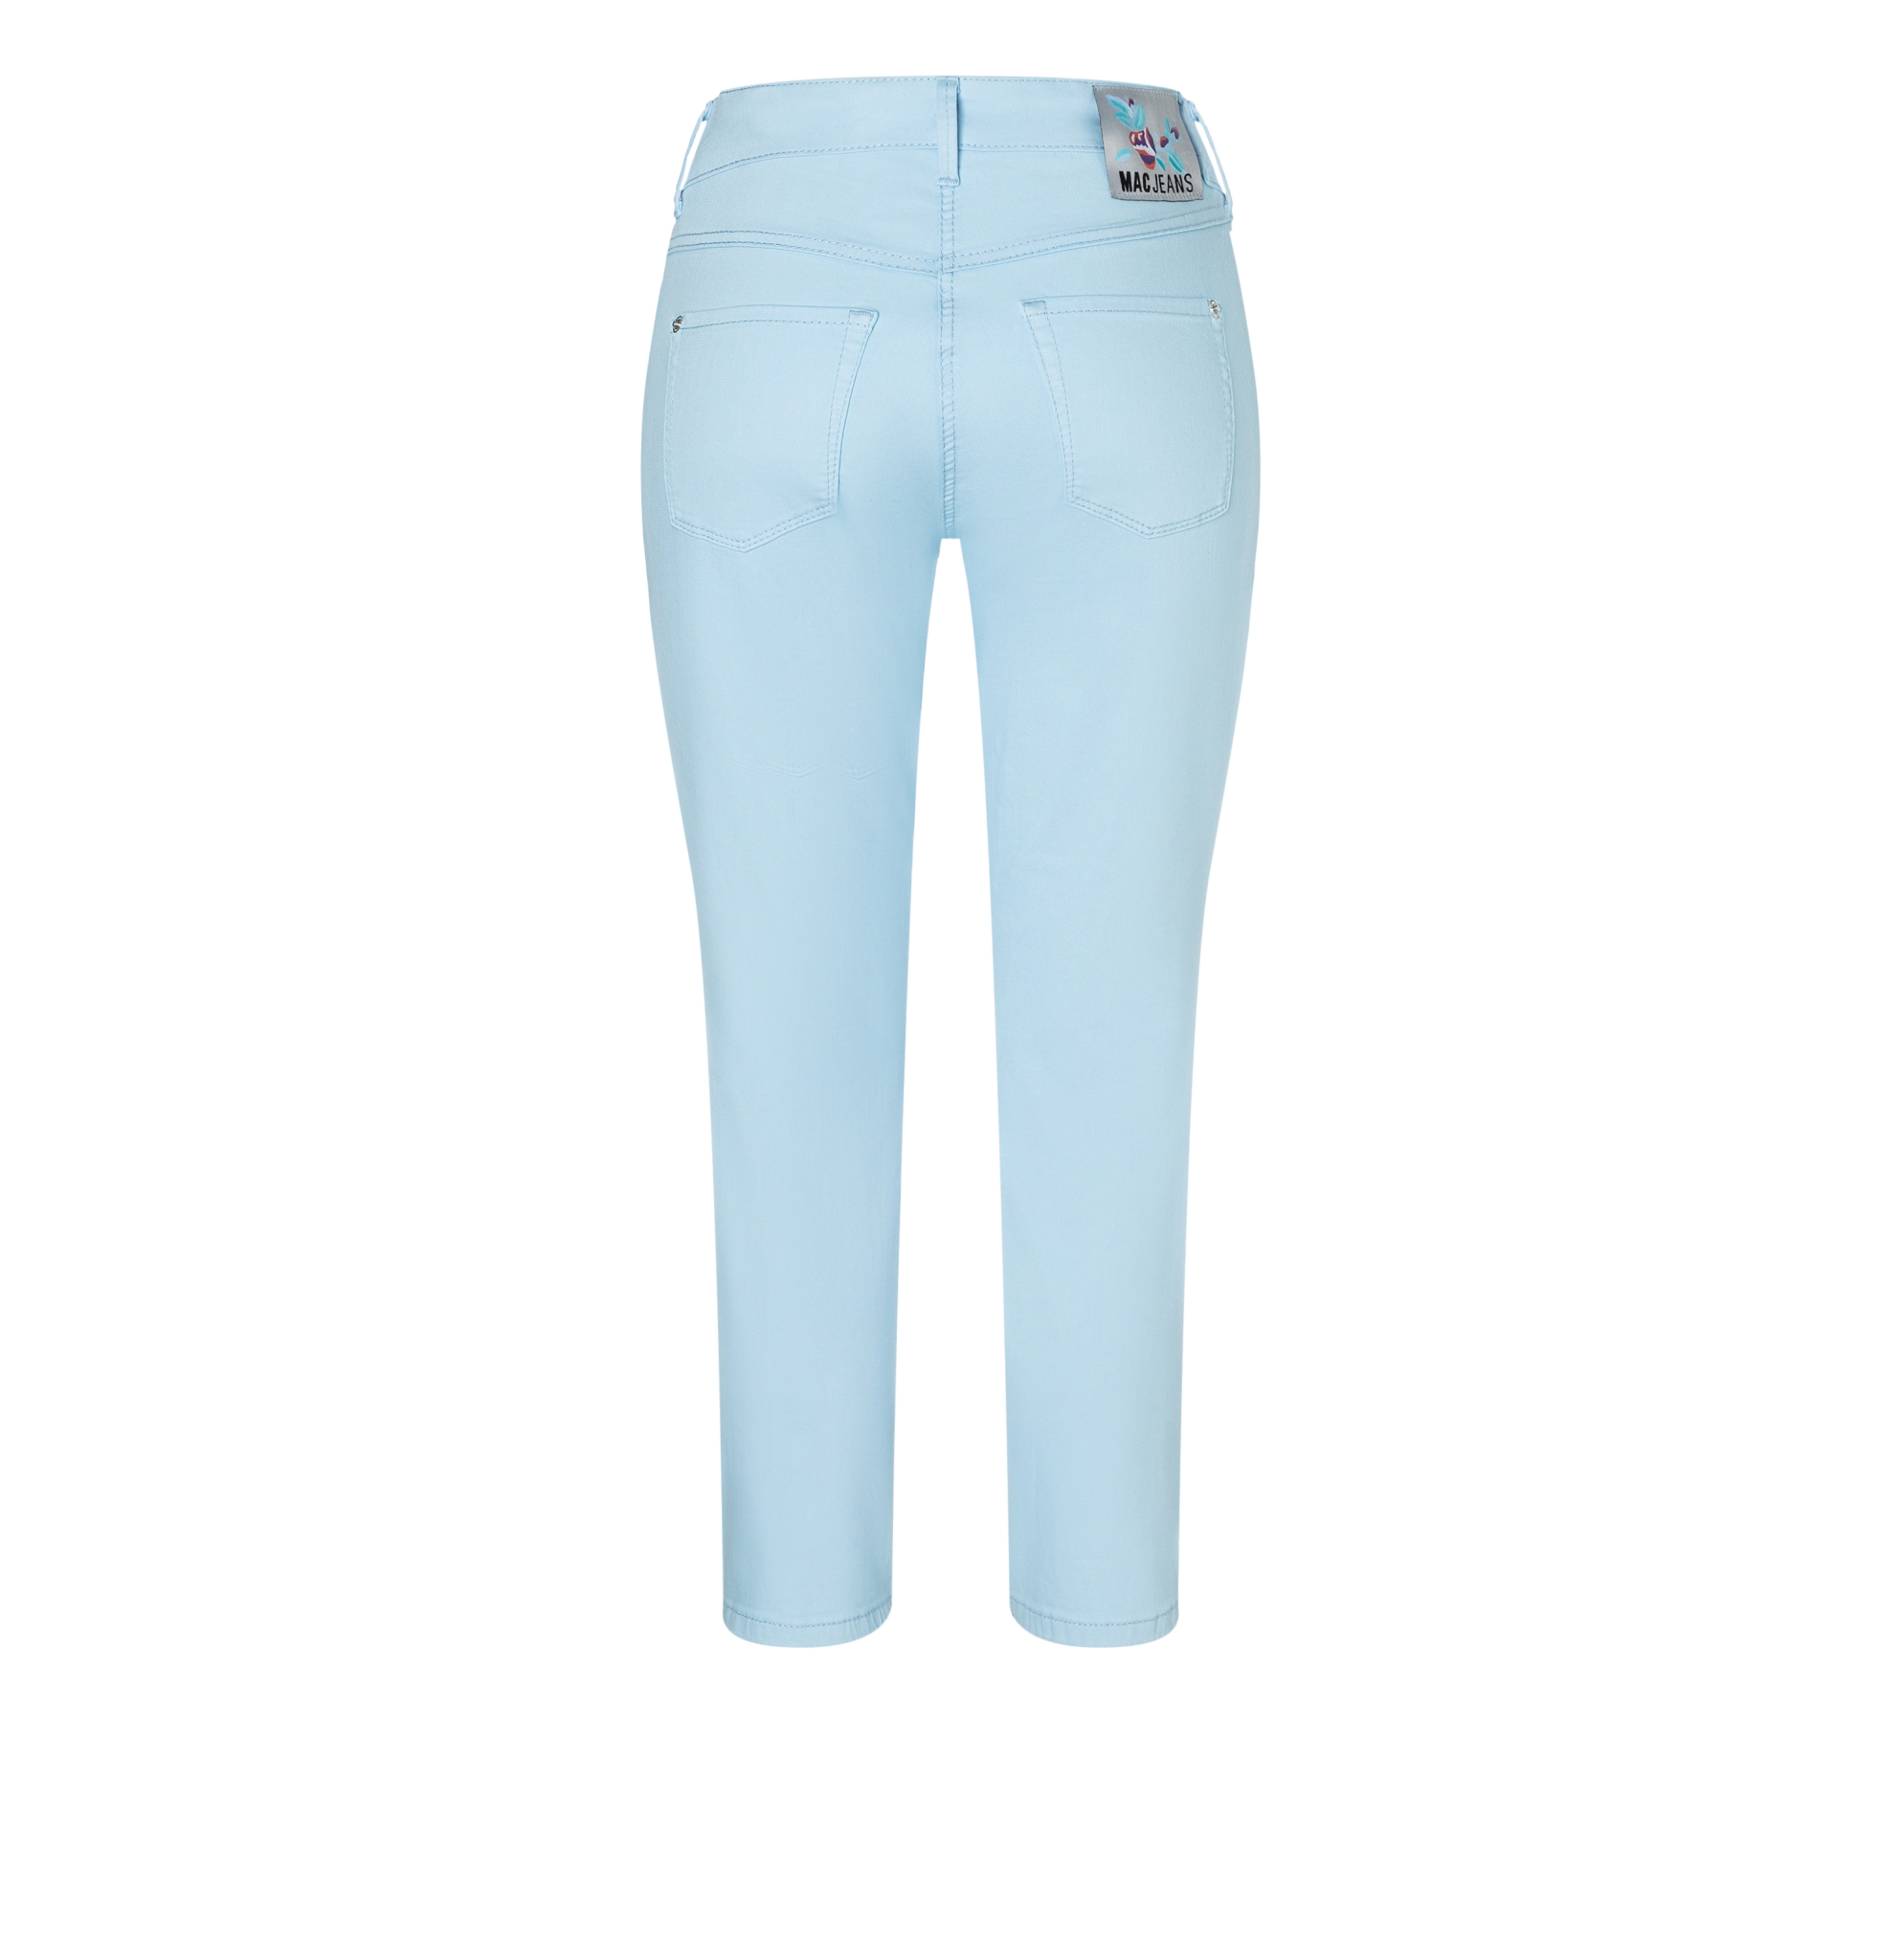 MAC Jeans 10742026